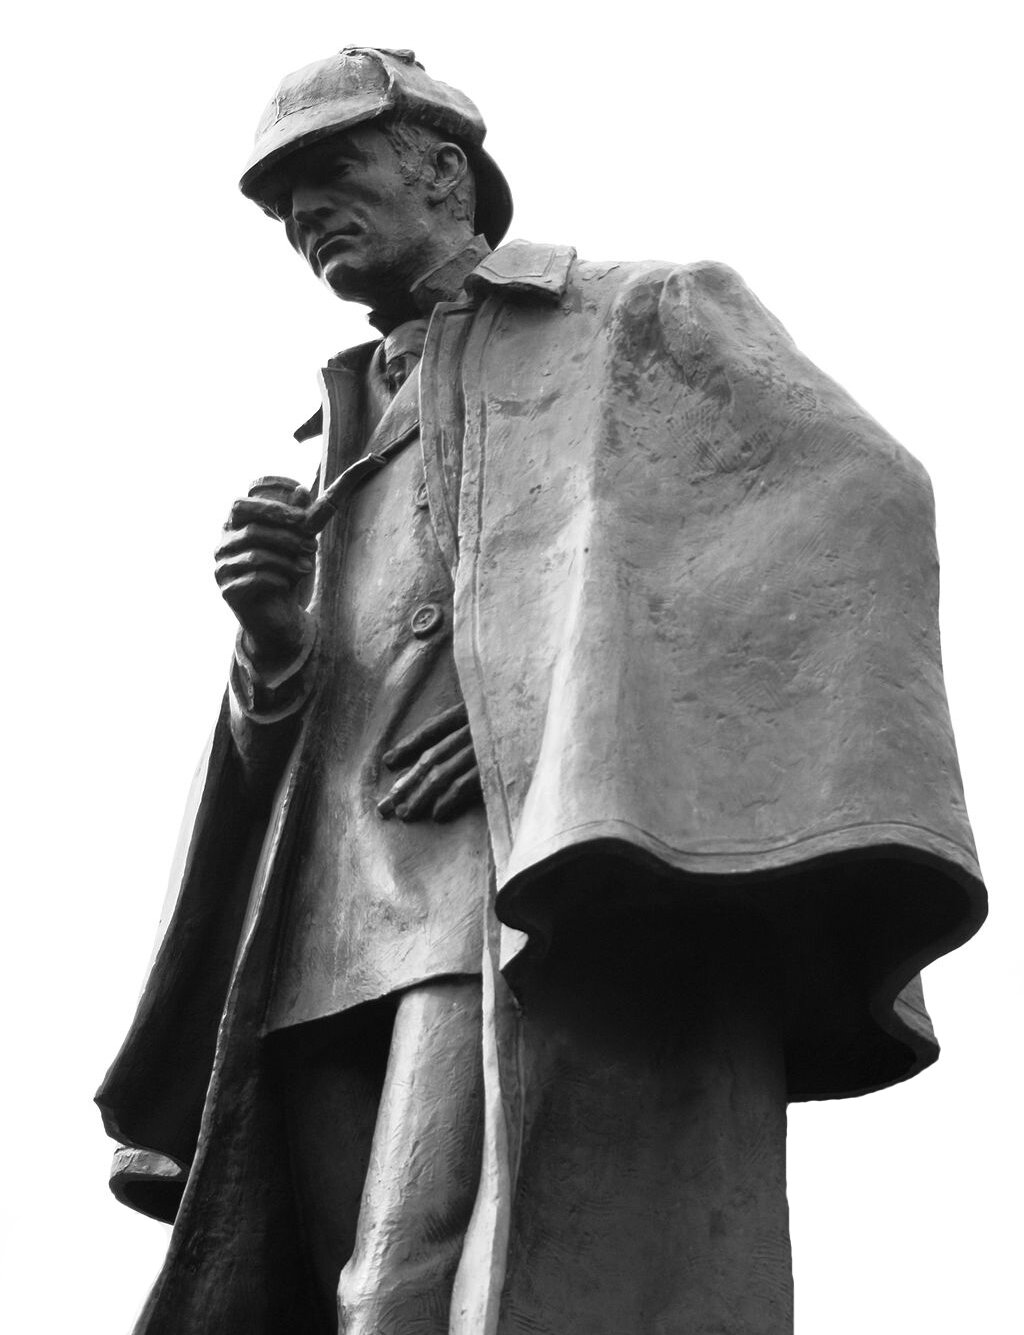 Pomnik Sherlocka Holmesa w Edynburgu Pomnik Sherlocka Holmesa w Edynburgu Źródło: Siddharth Krish, fotografia barwna, licencja: CC BY-SA 3.0.